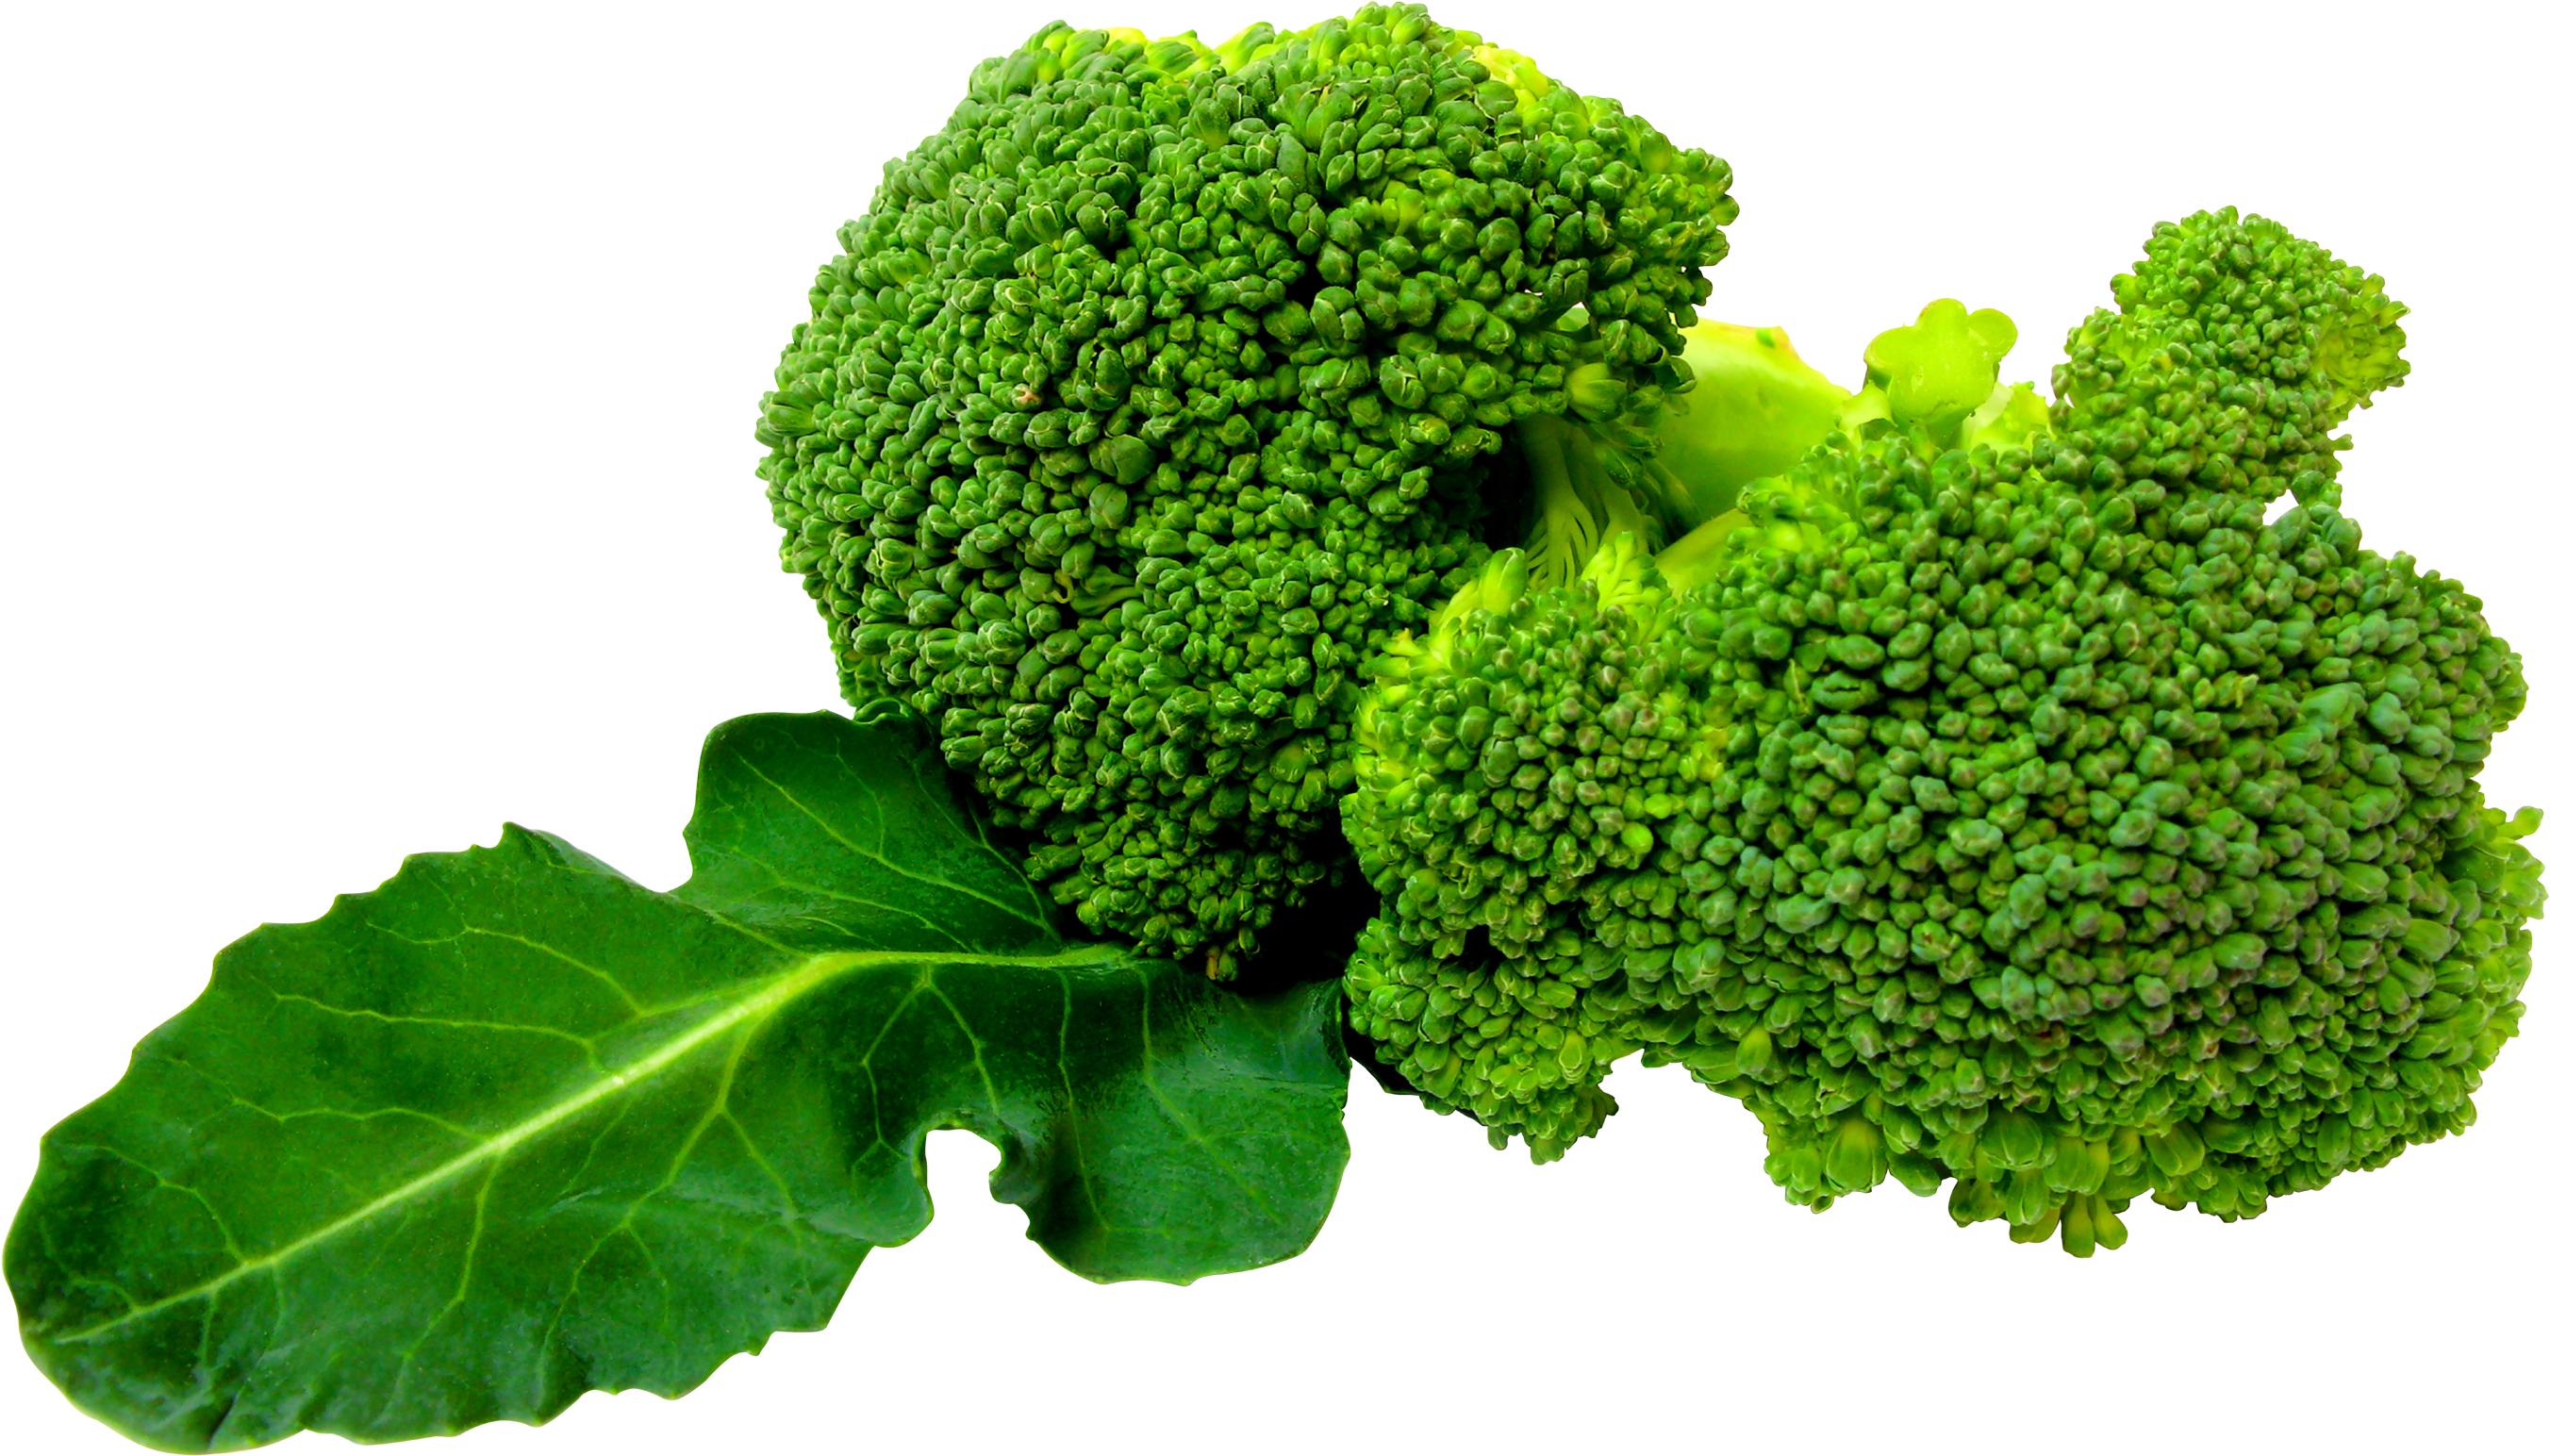 Broccoli Png Image PNG Image